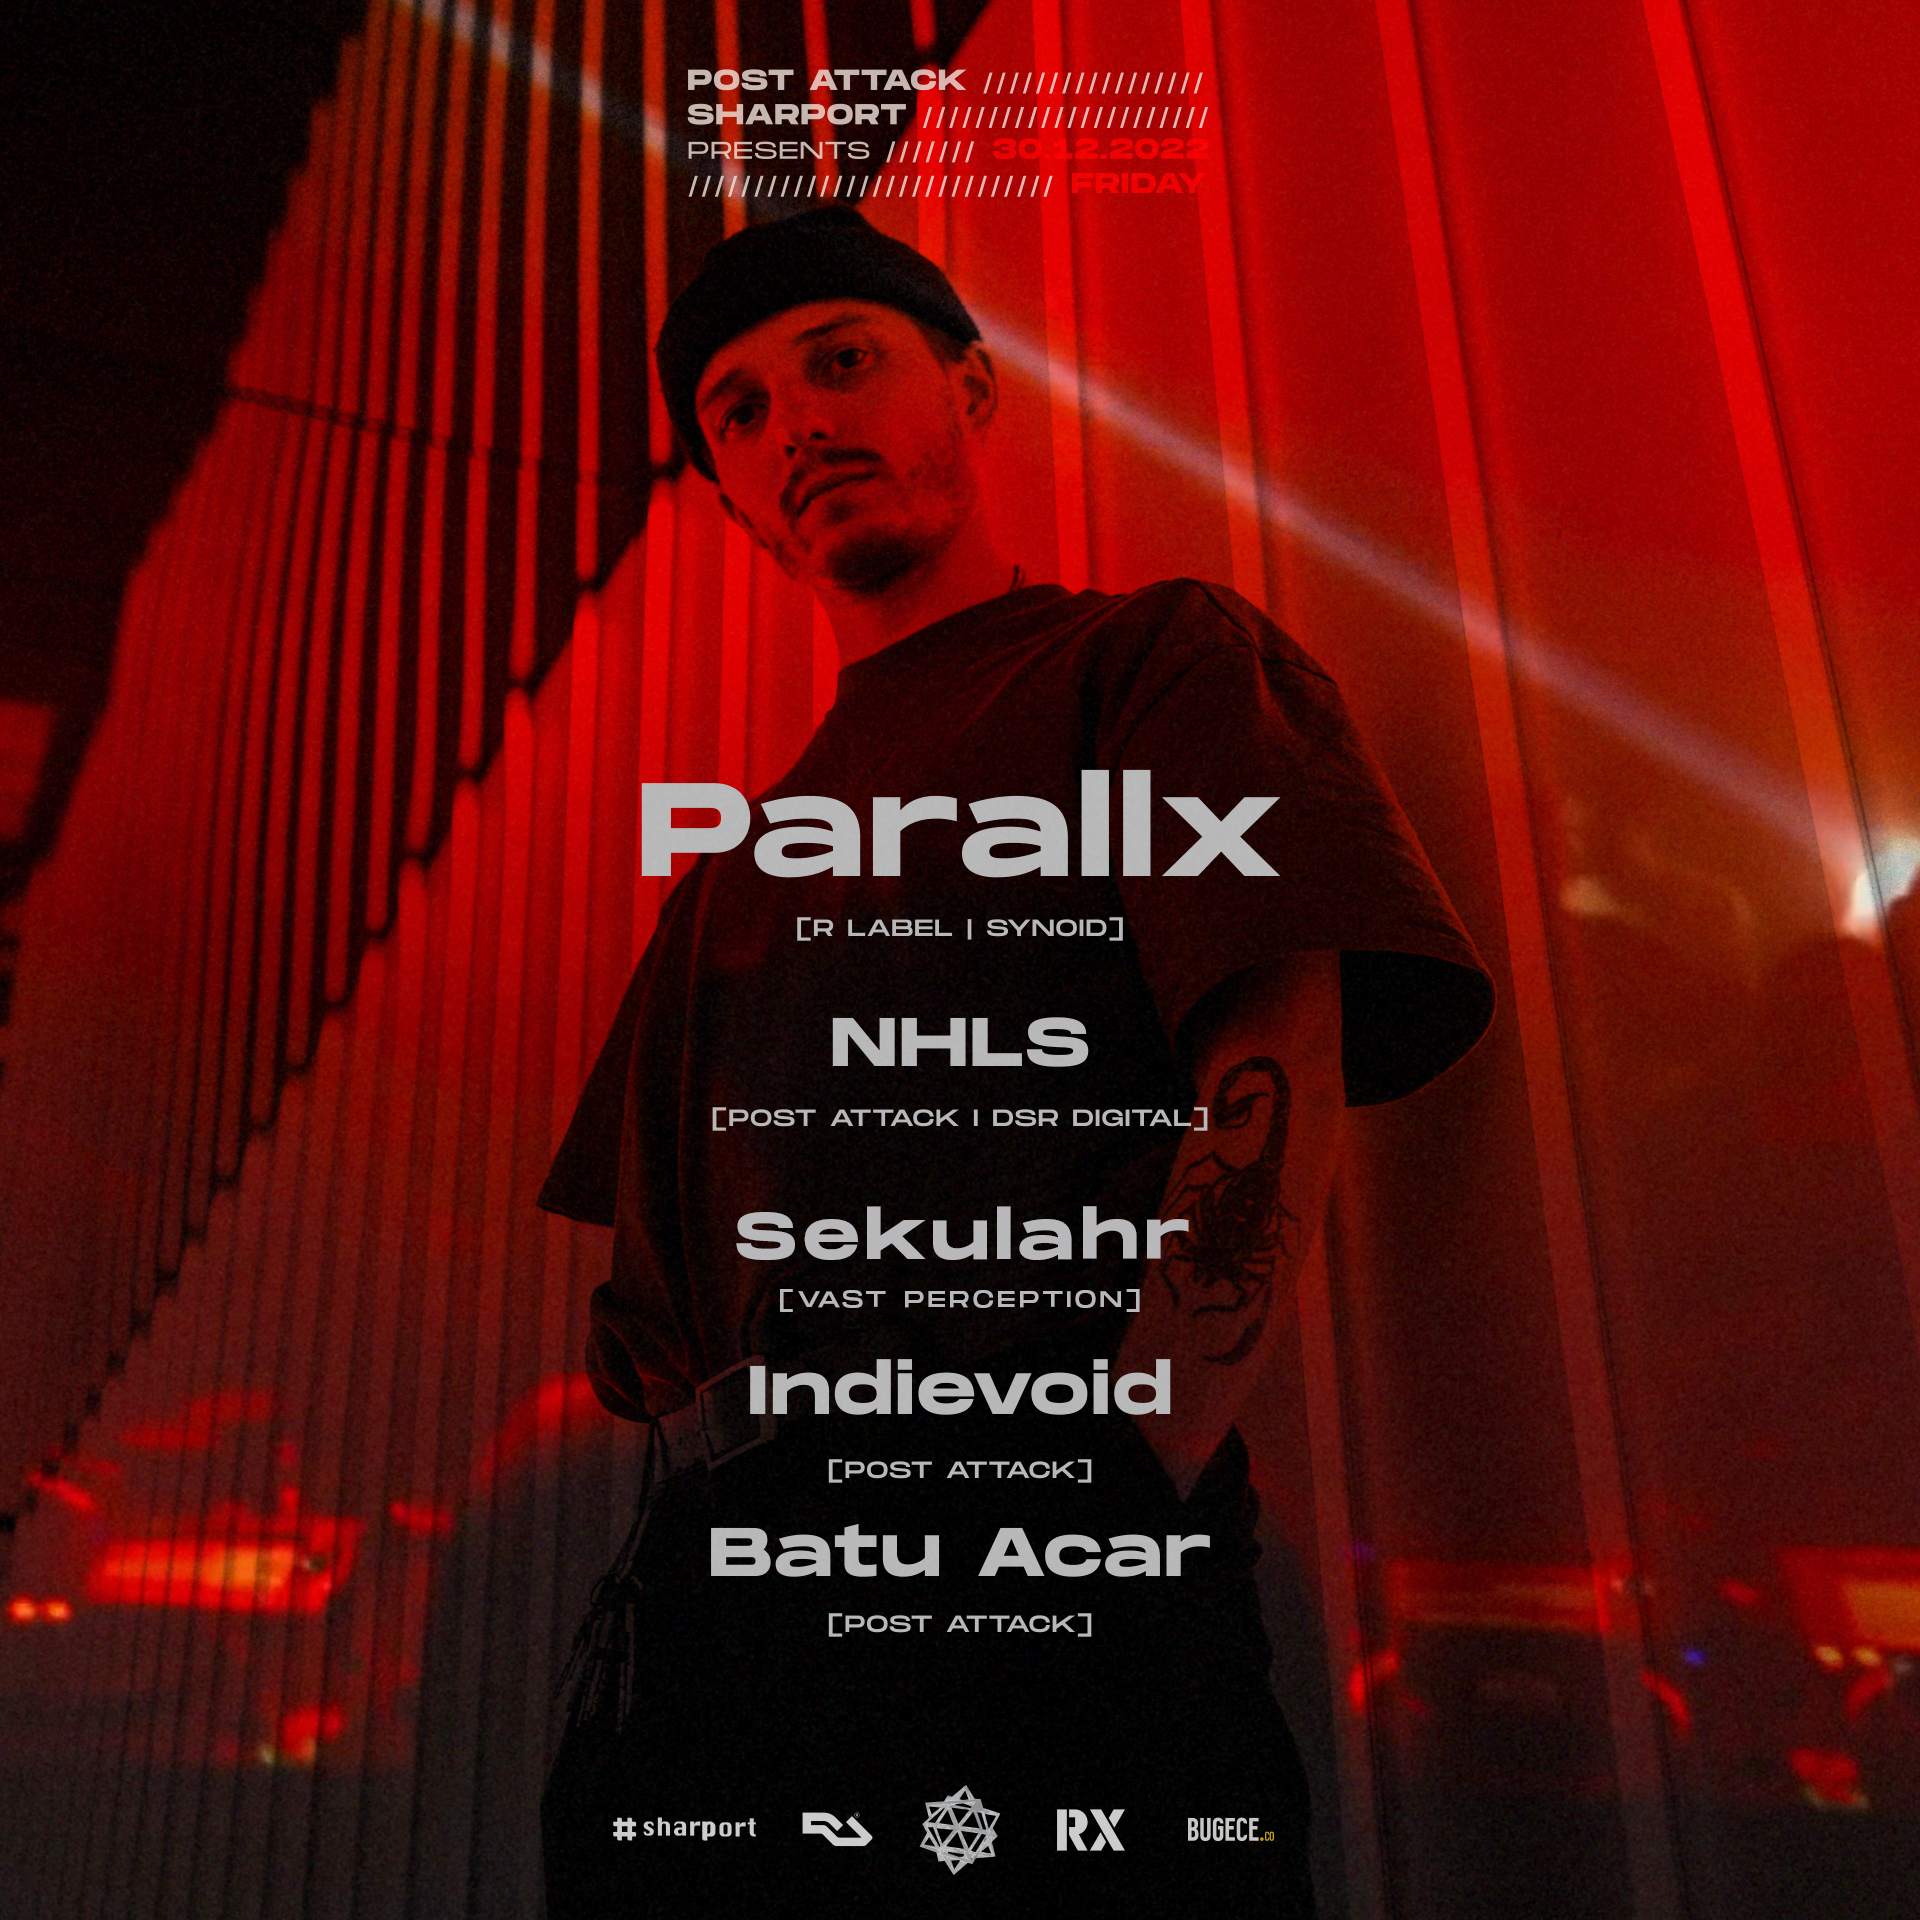 Parallx